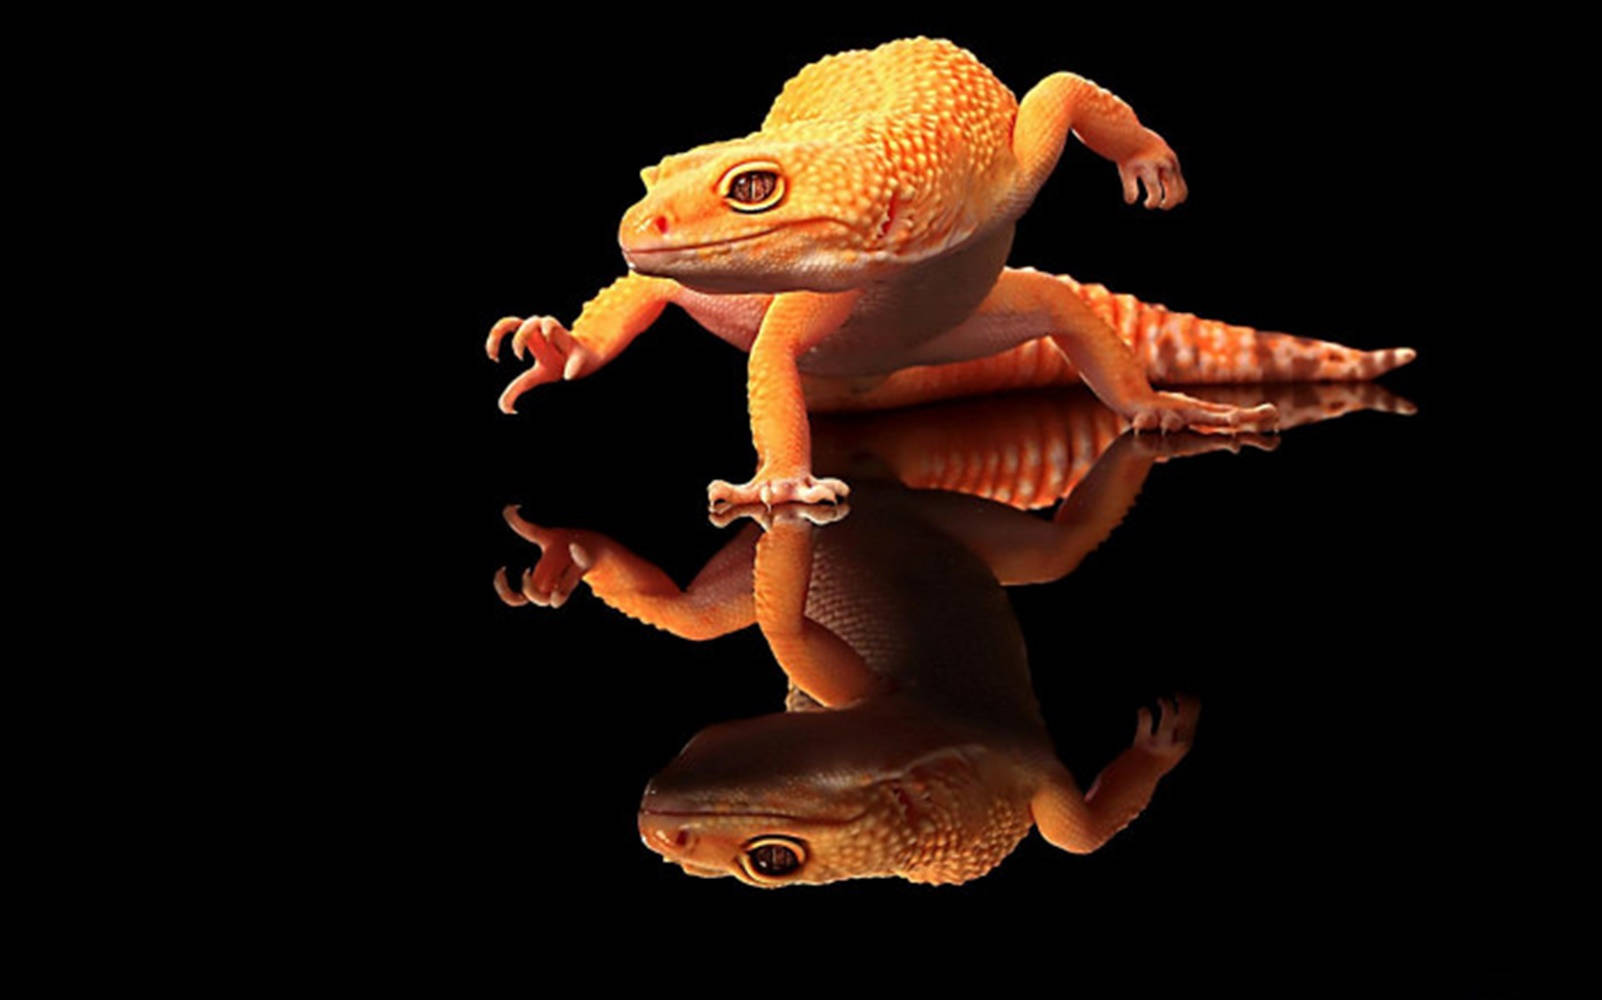 Orange Gecko On Reflective Floor